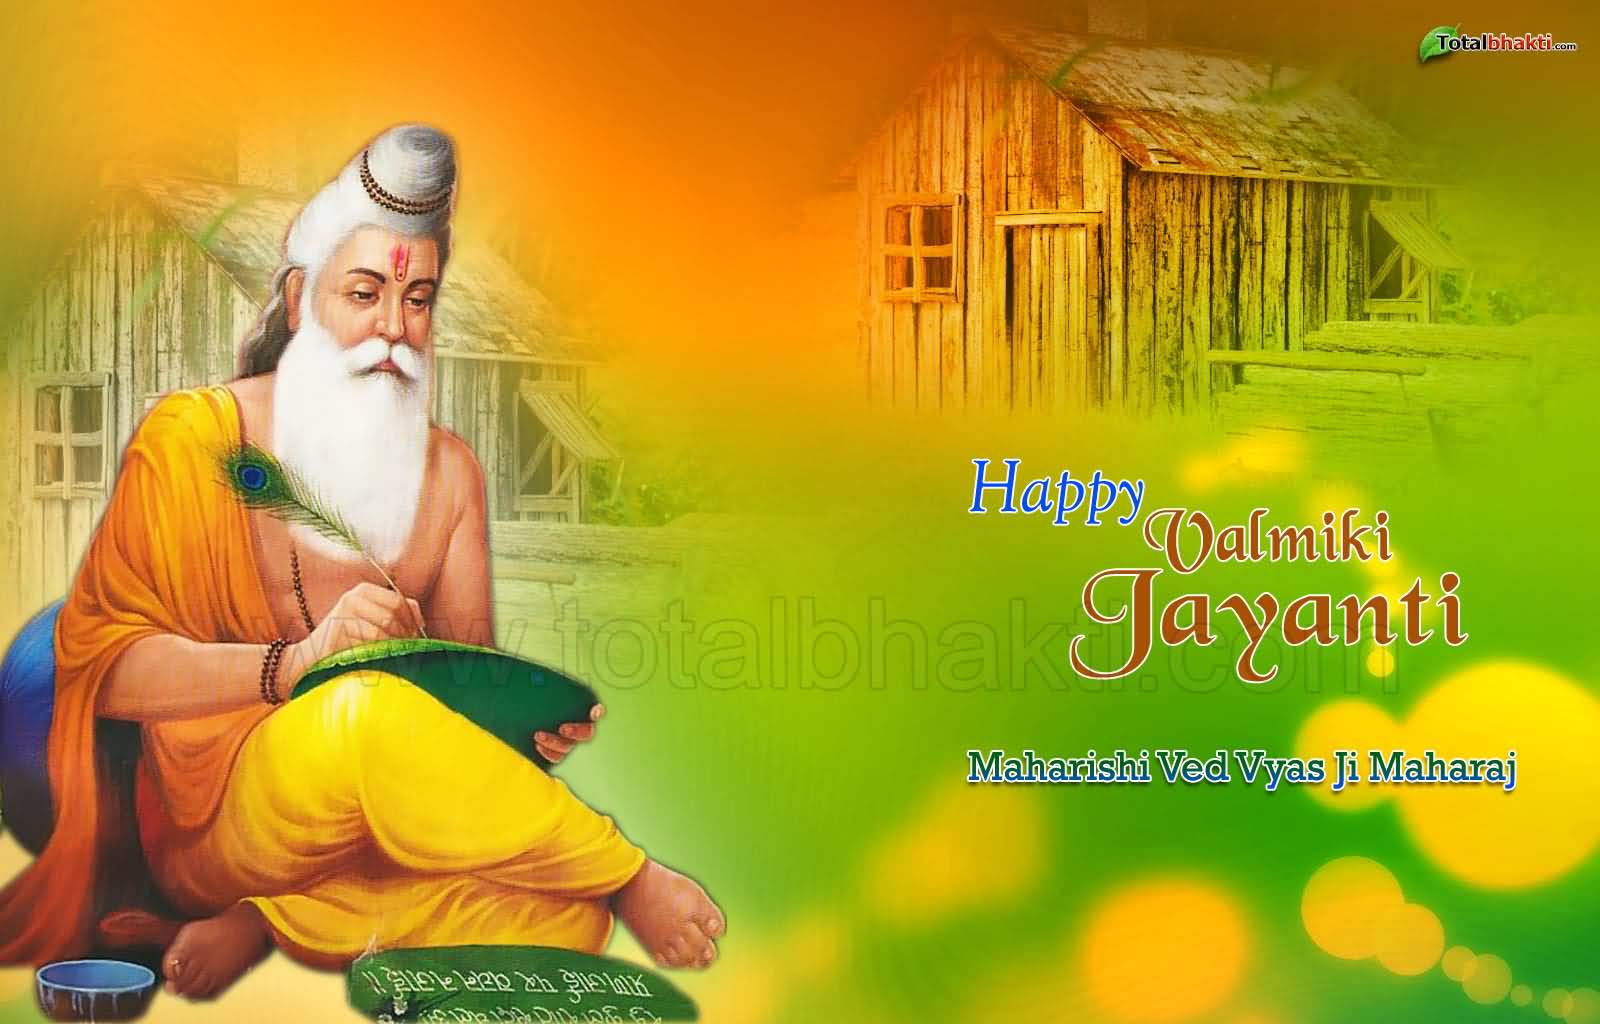 Happy Valmiki Jayanti Wishes Picture